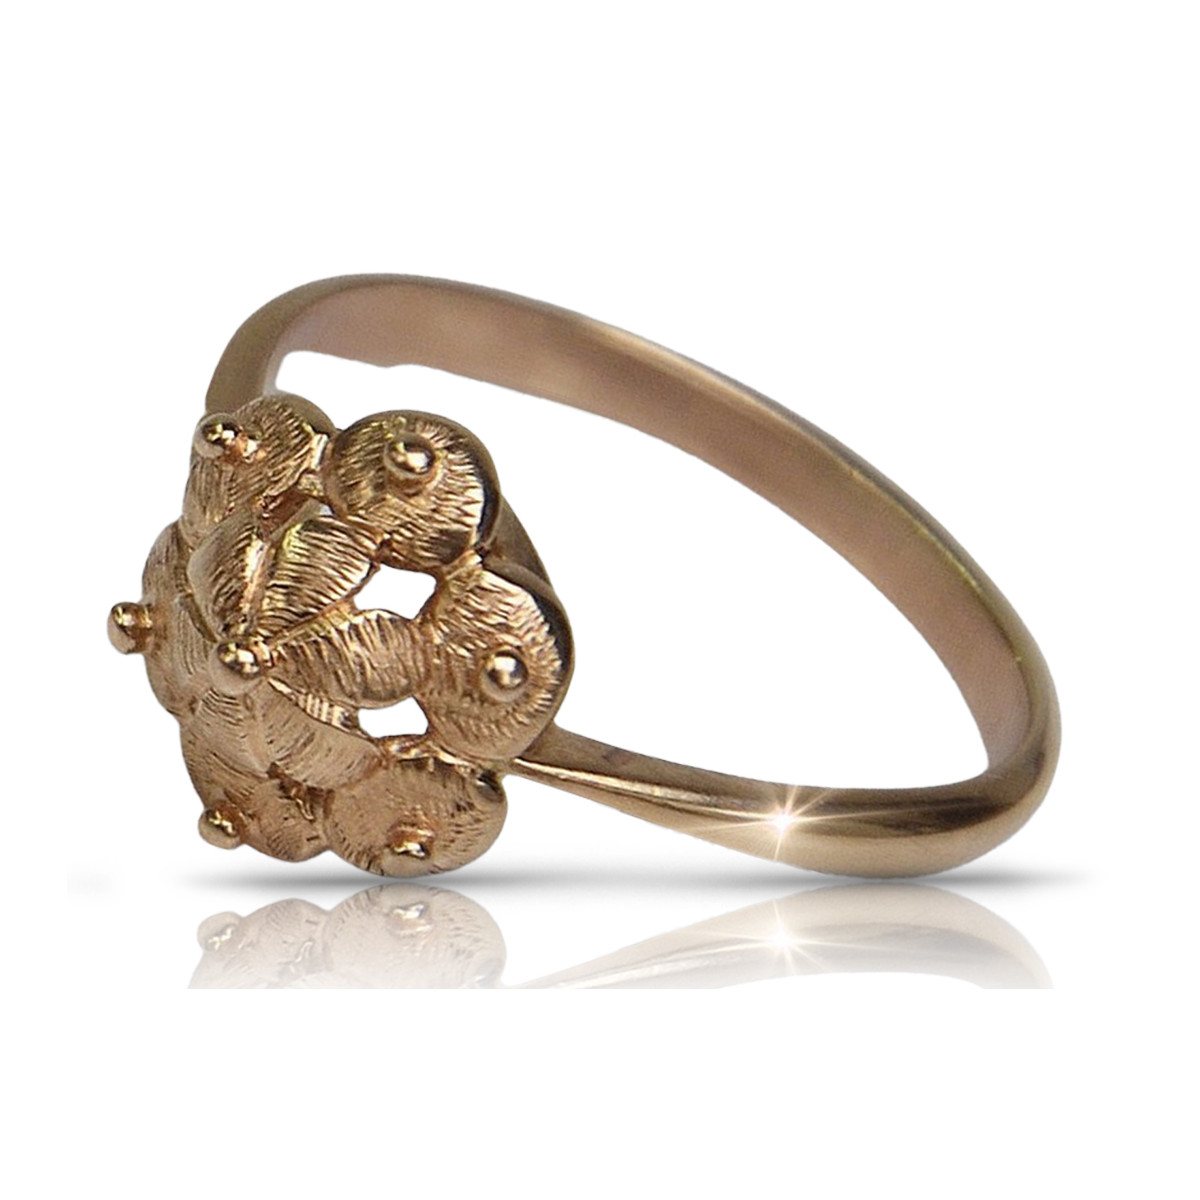 Russian Soviet rose pink 14k 585 gold Vintage ring vrn004